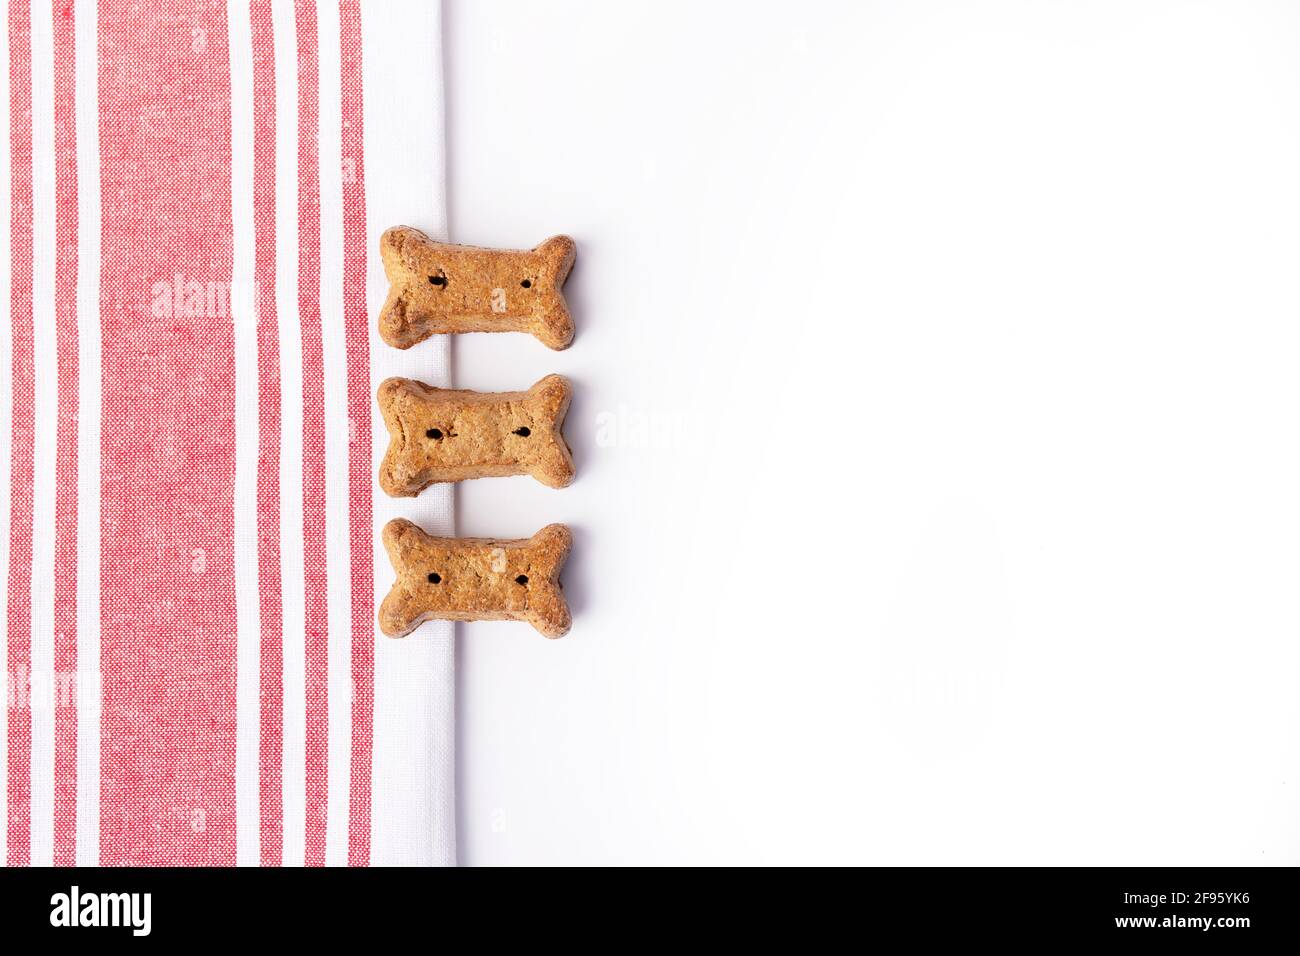 Tre ossee a forma di cane treats su strisce rosse e bianche asciugamano bianco Foto Stock